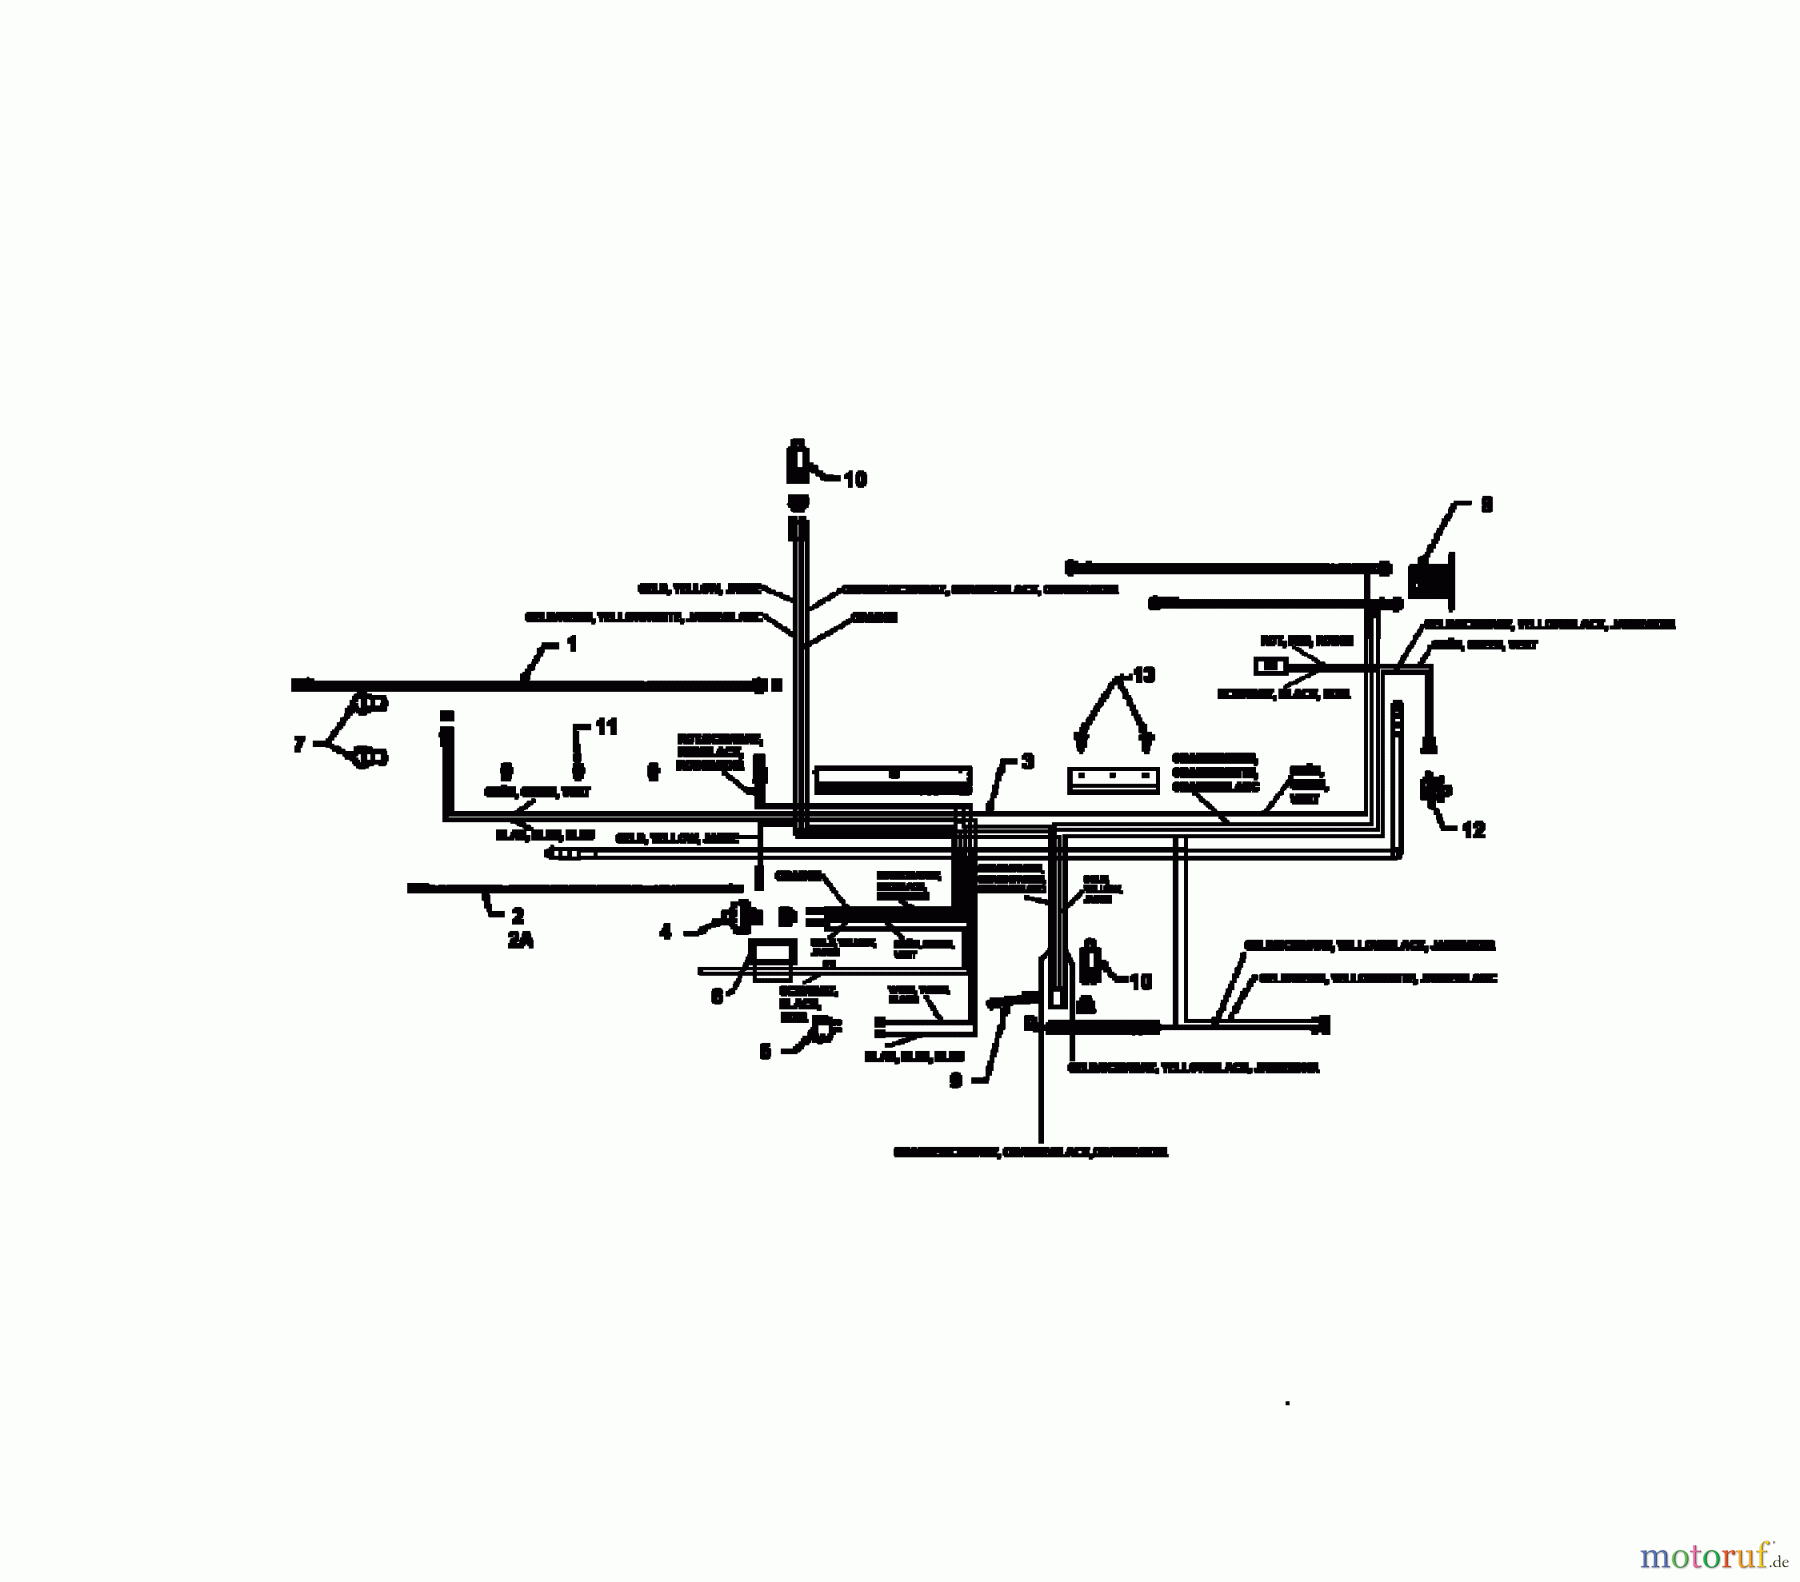  MTD Lawn tractors E 145 136M765N678  (1996) Wiring diagram Vanguard